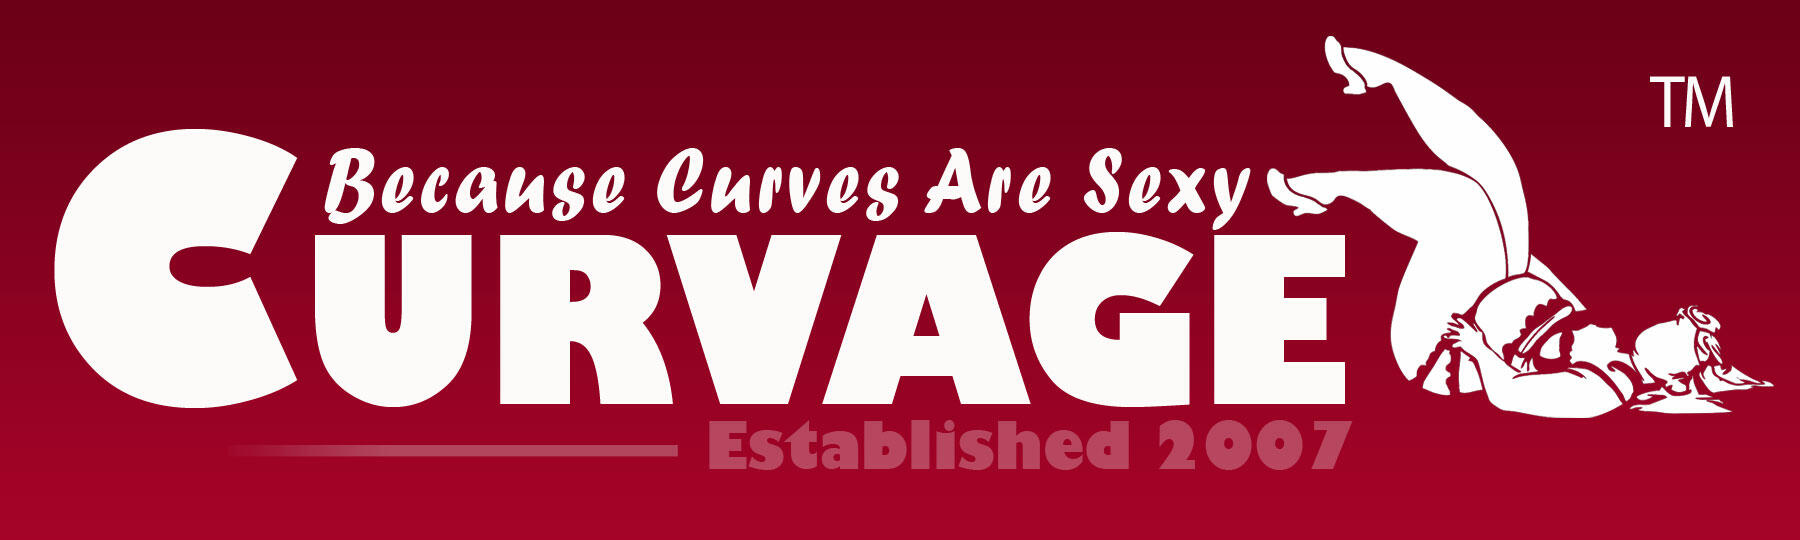 curvage.org